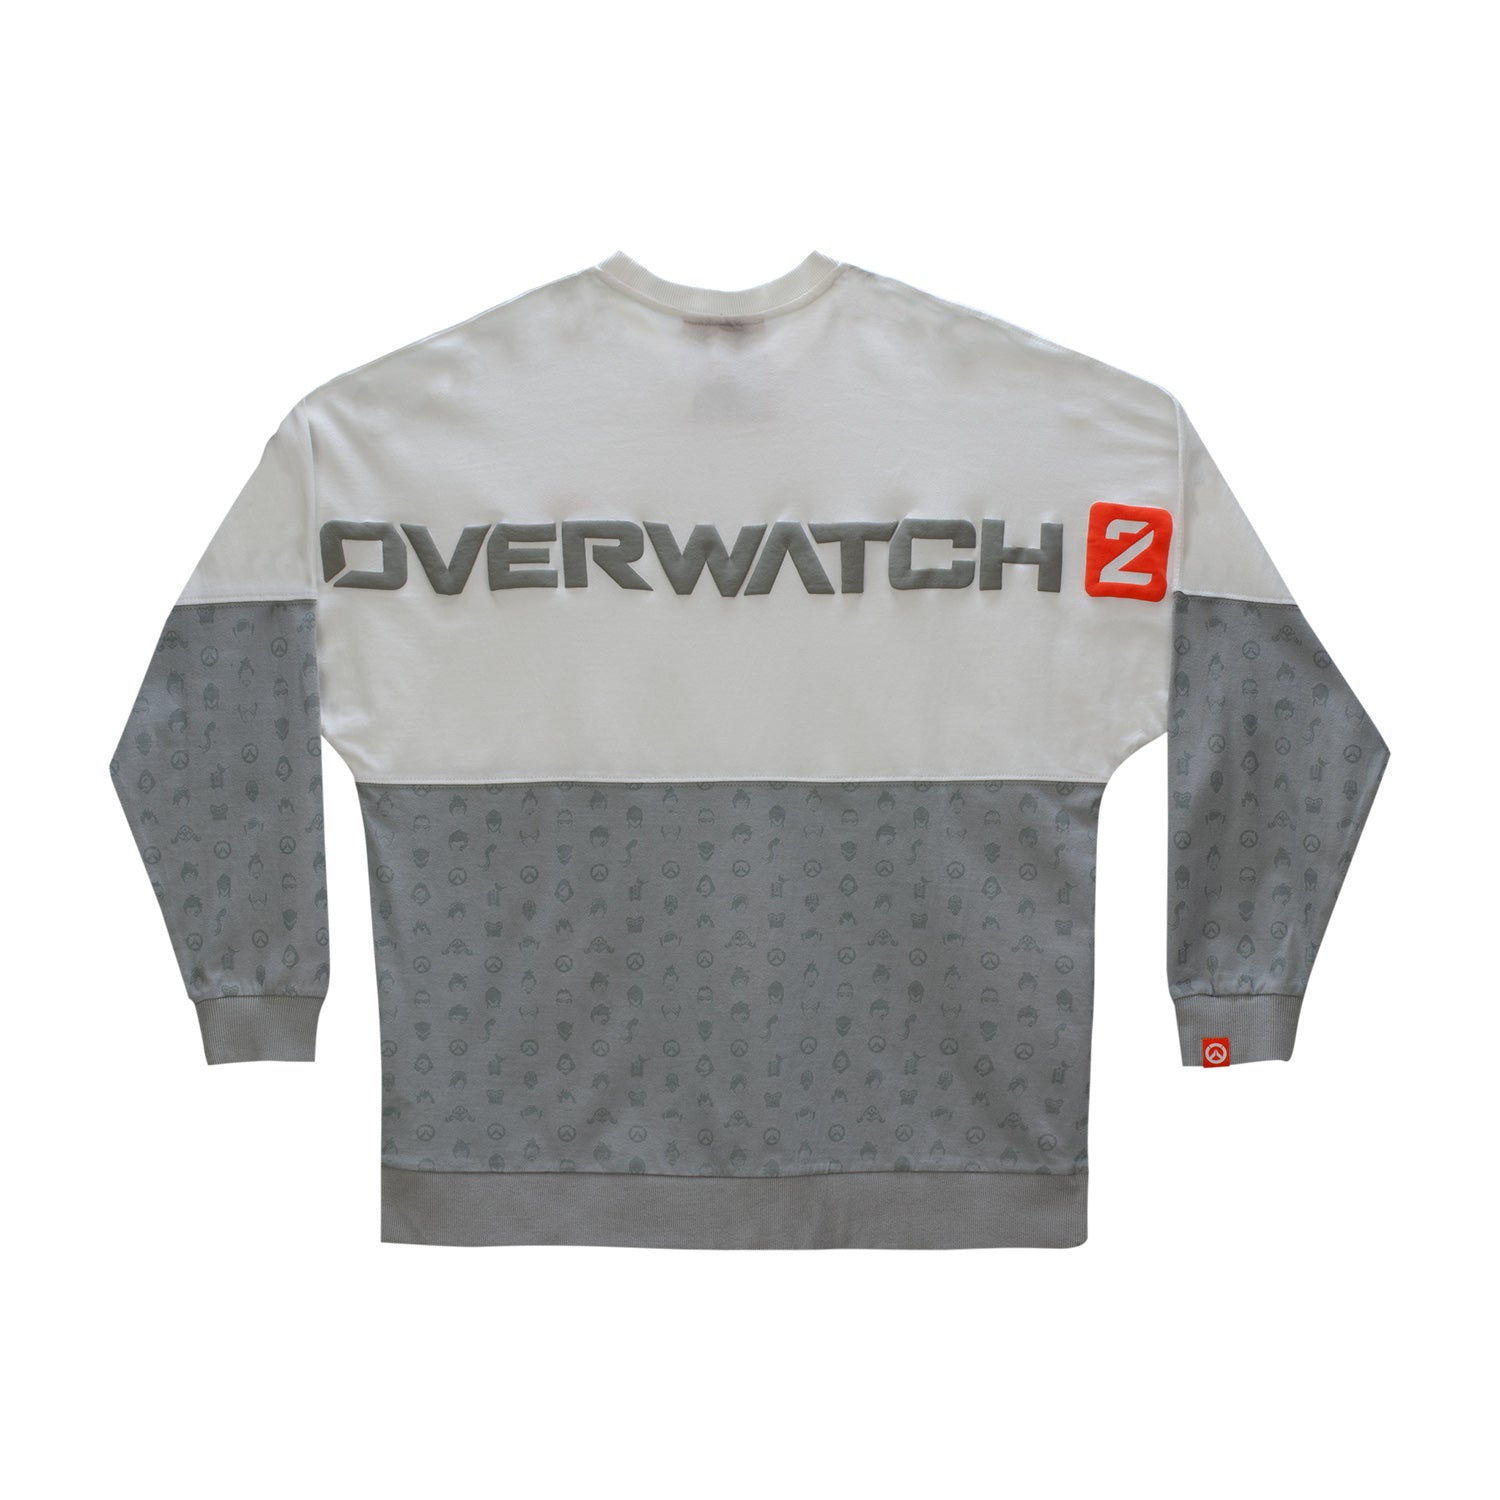 Overwatch 2 Billboard Long Sleeve Grey T-Shirt - Back View